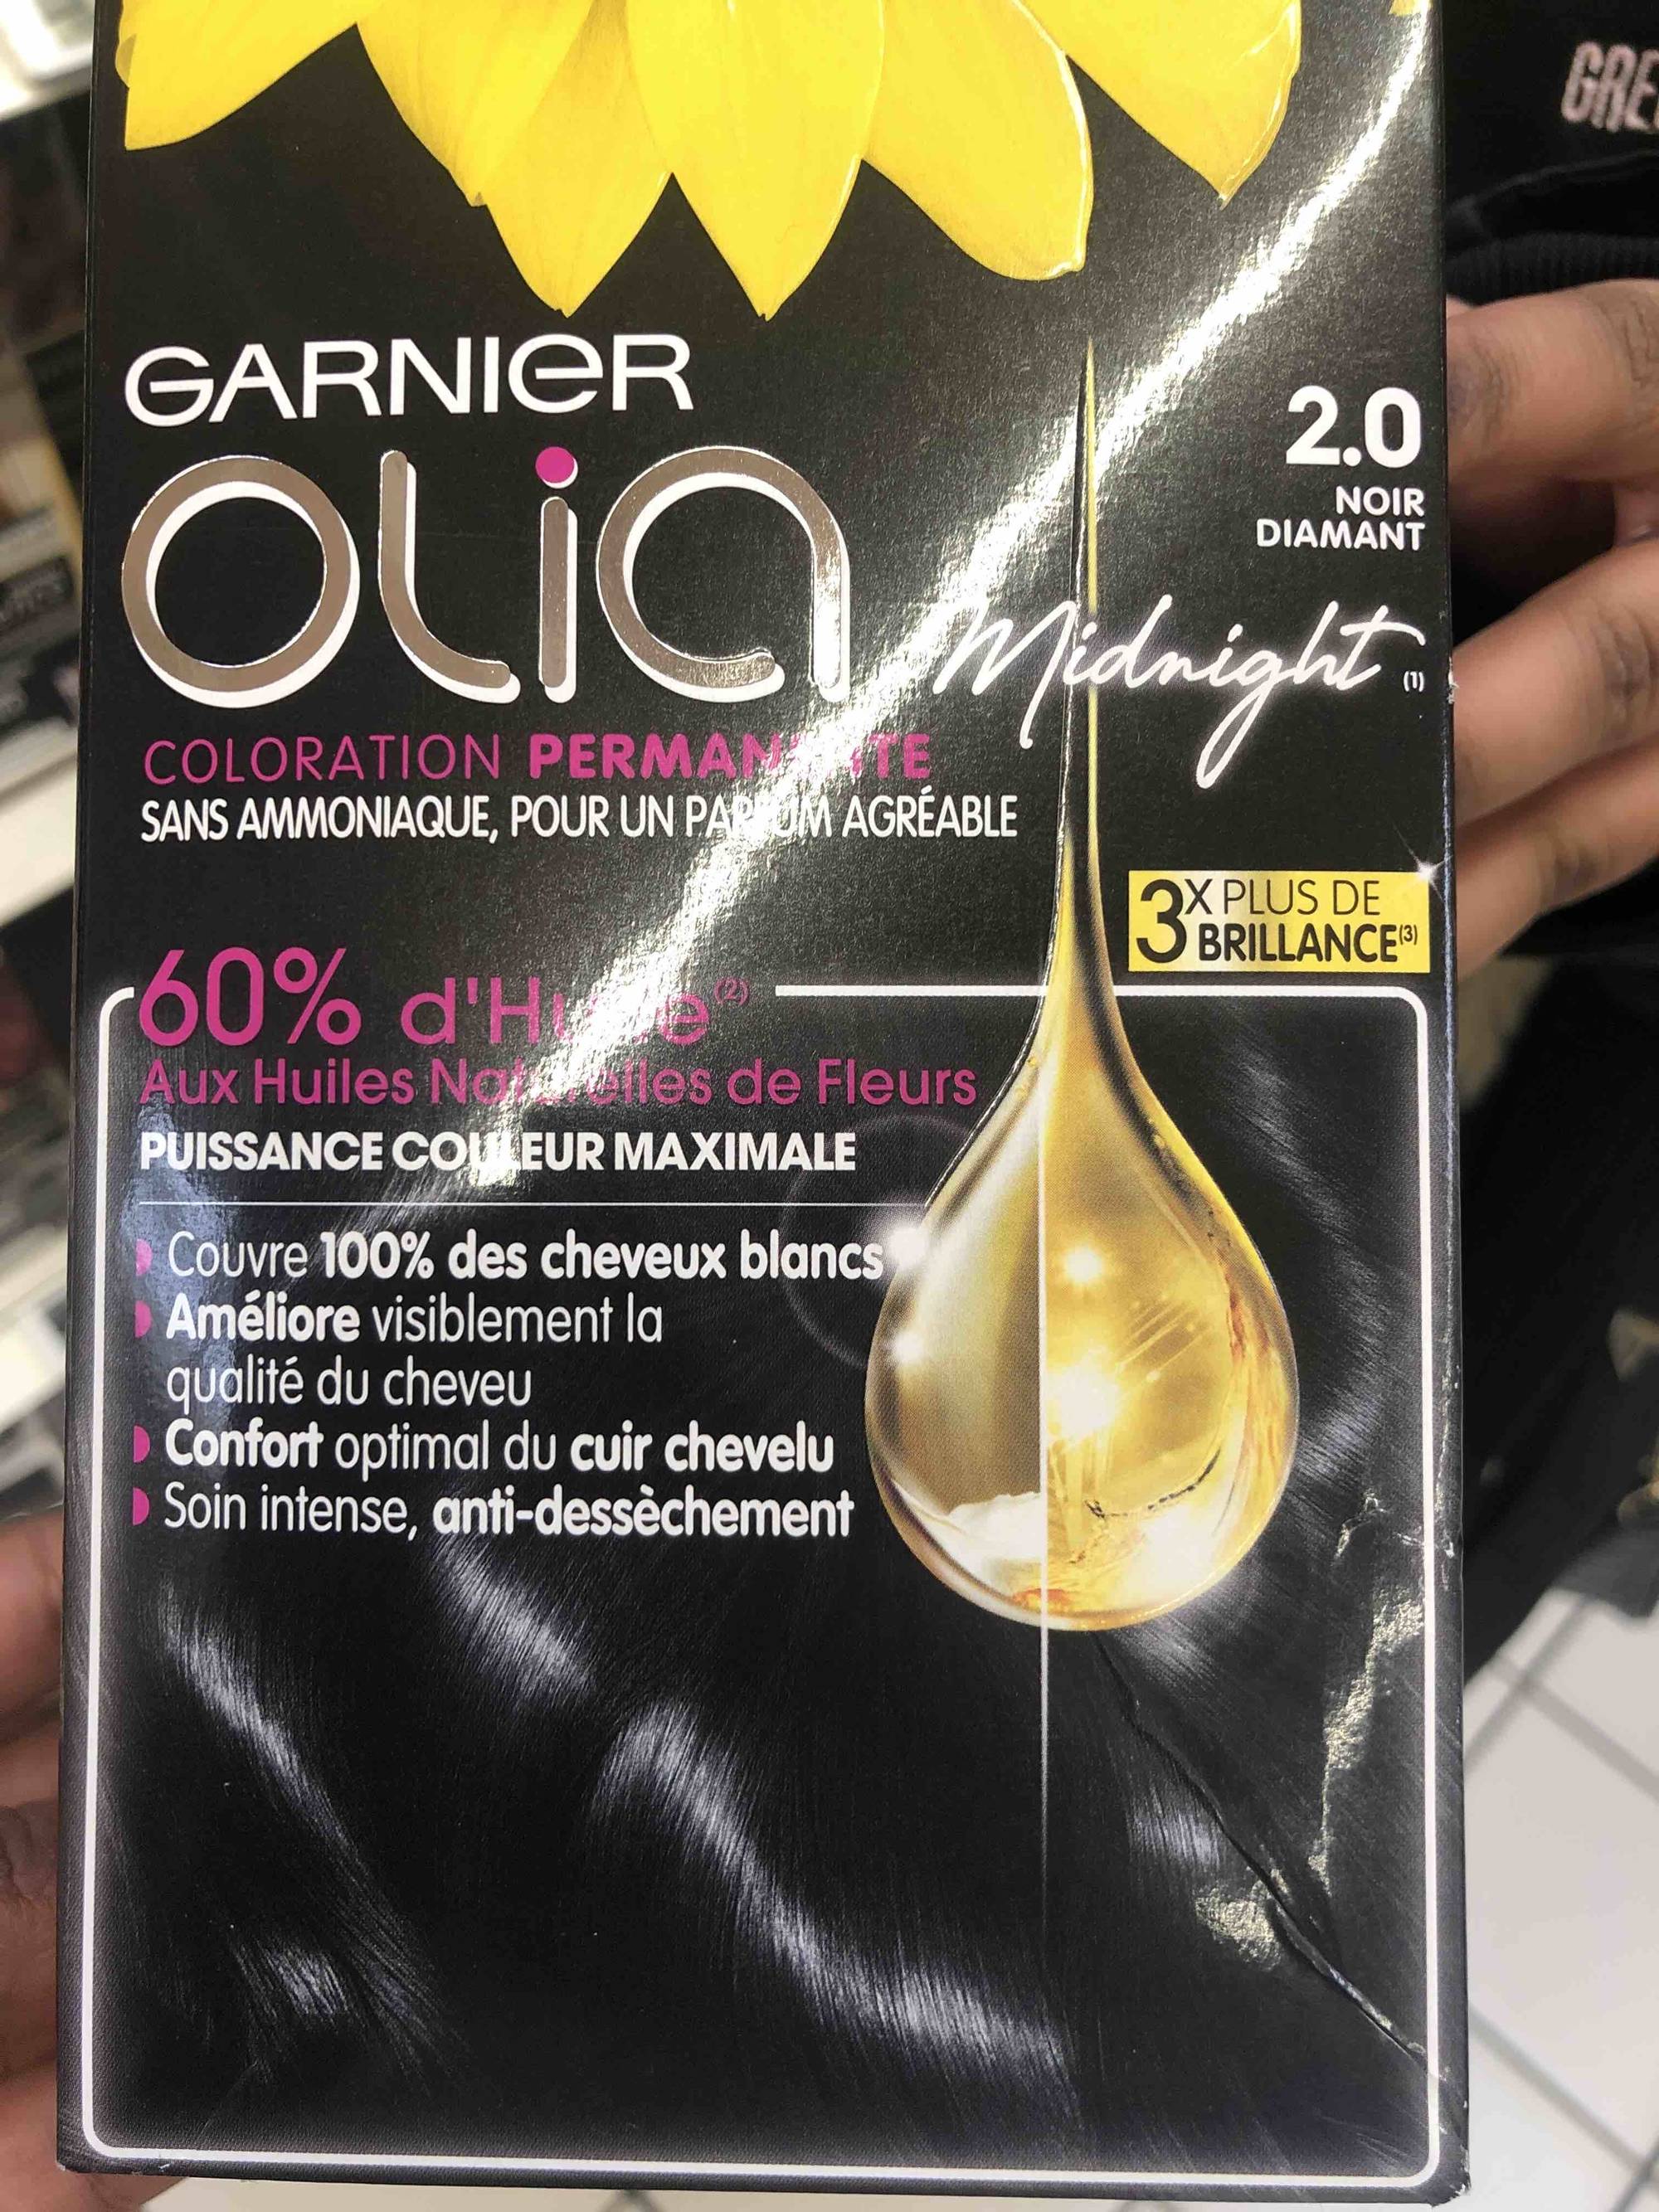 GARNIER - Olia midnight - Coloration permanente - 2.0 noir diamant